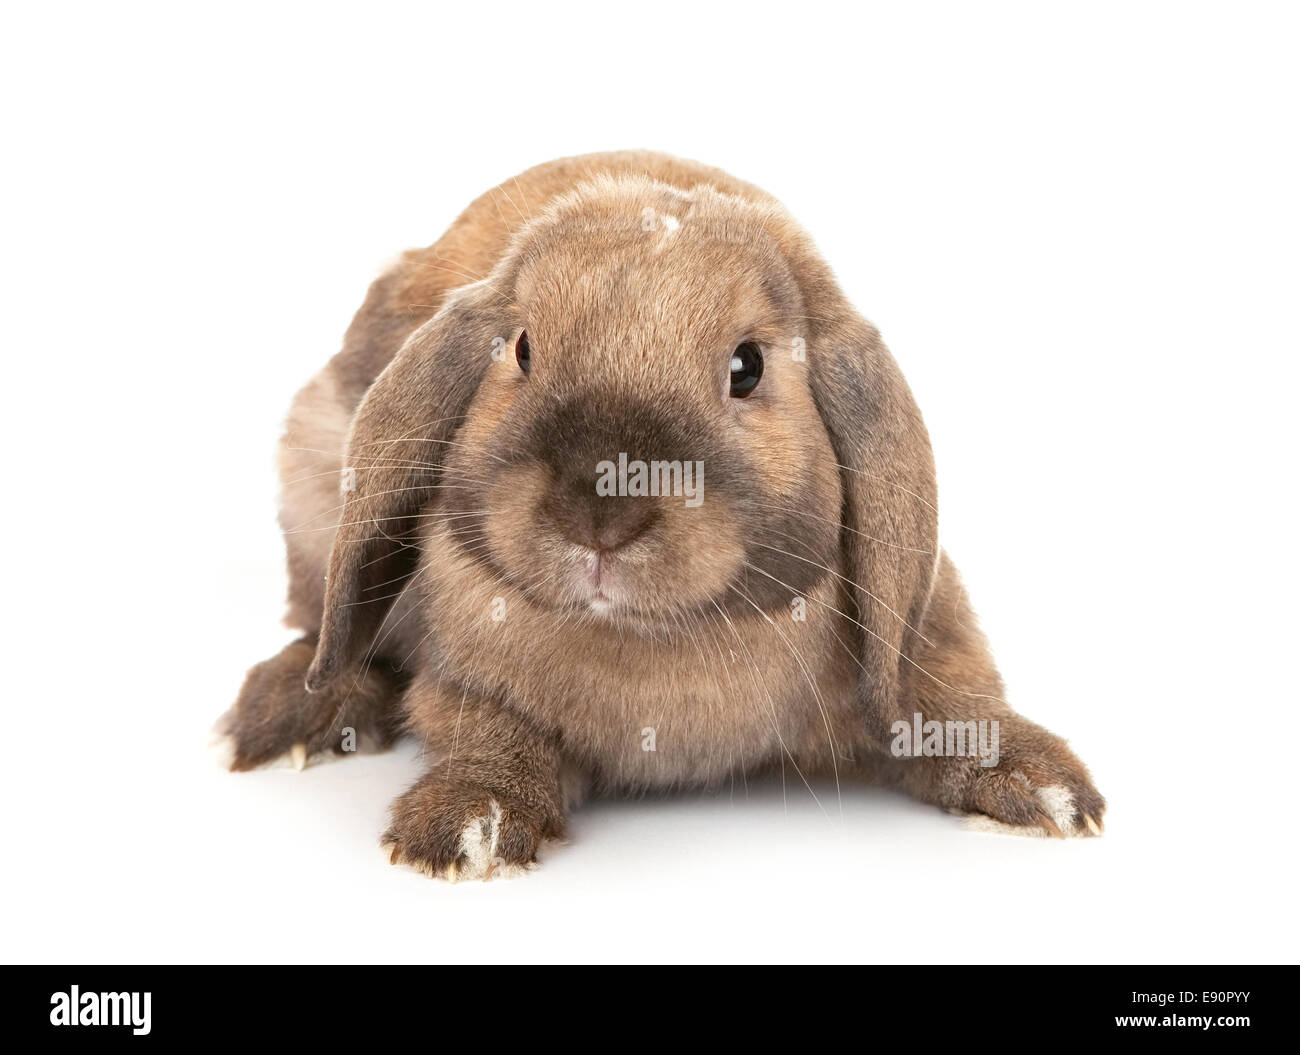 Dwarf lop-eared razze di coniglio di Ram. Foto Stock